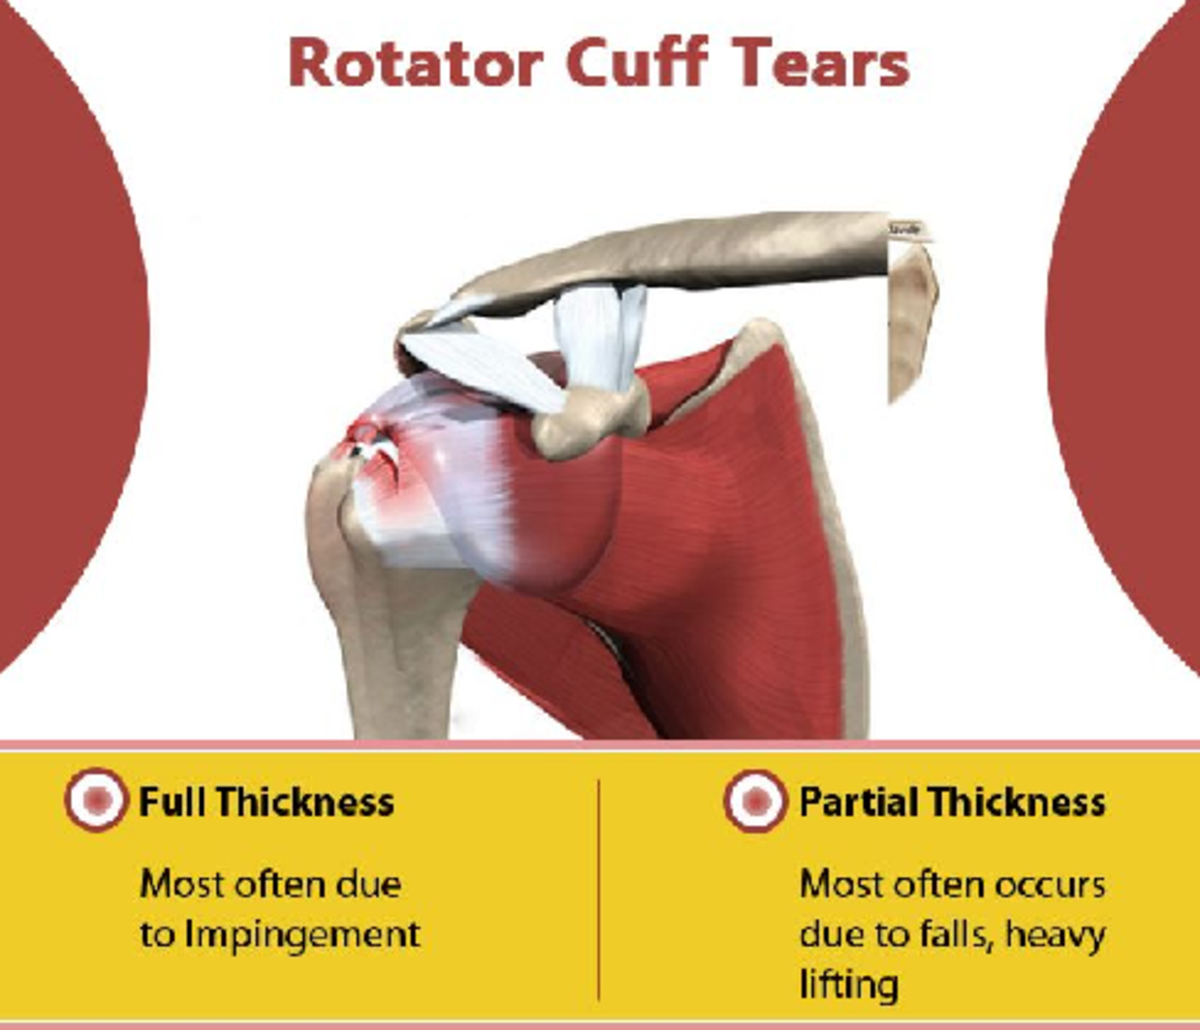 Types of Rotator Cuff Tears